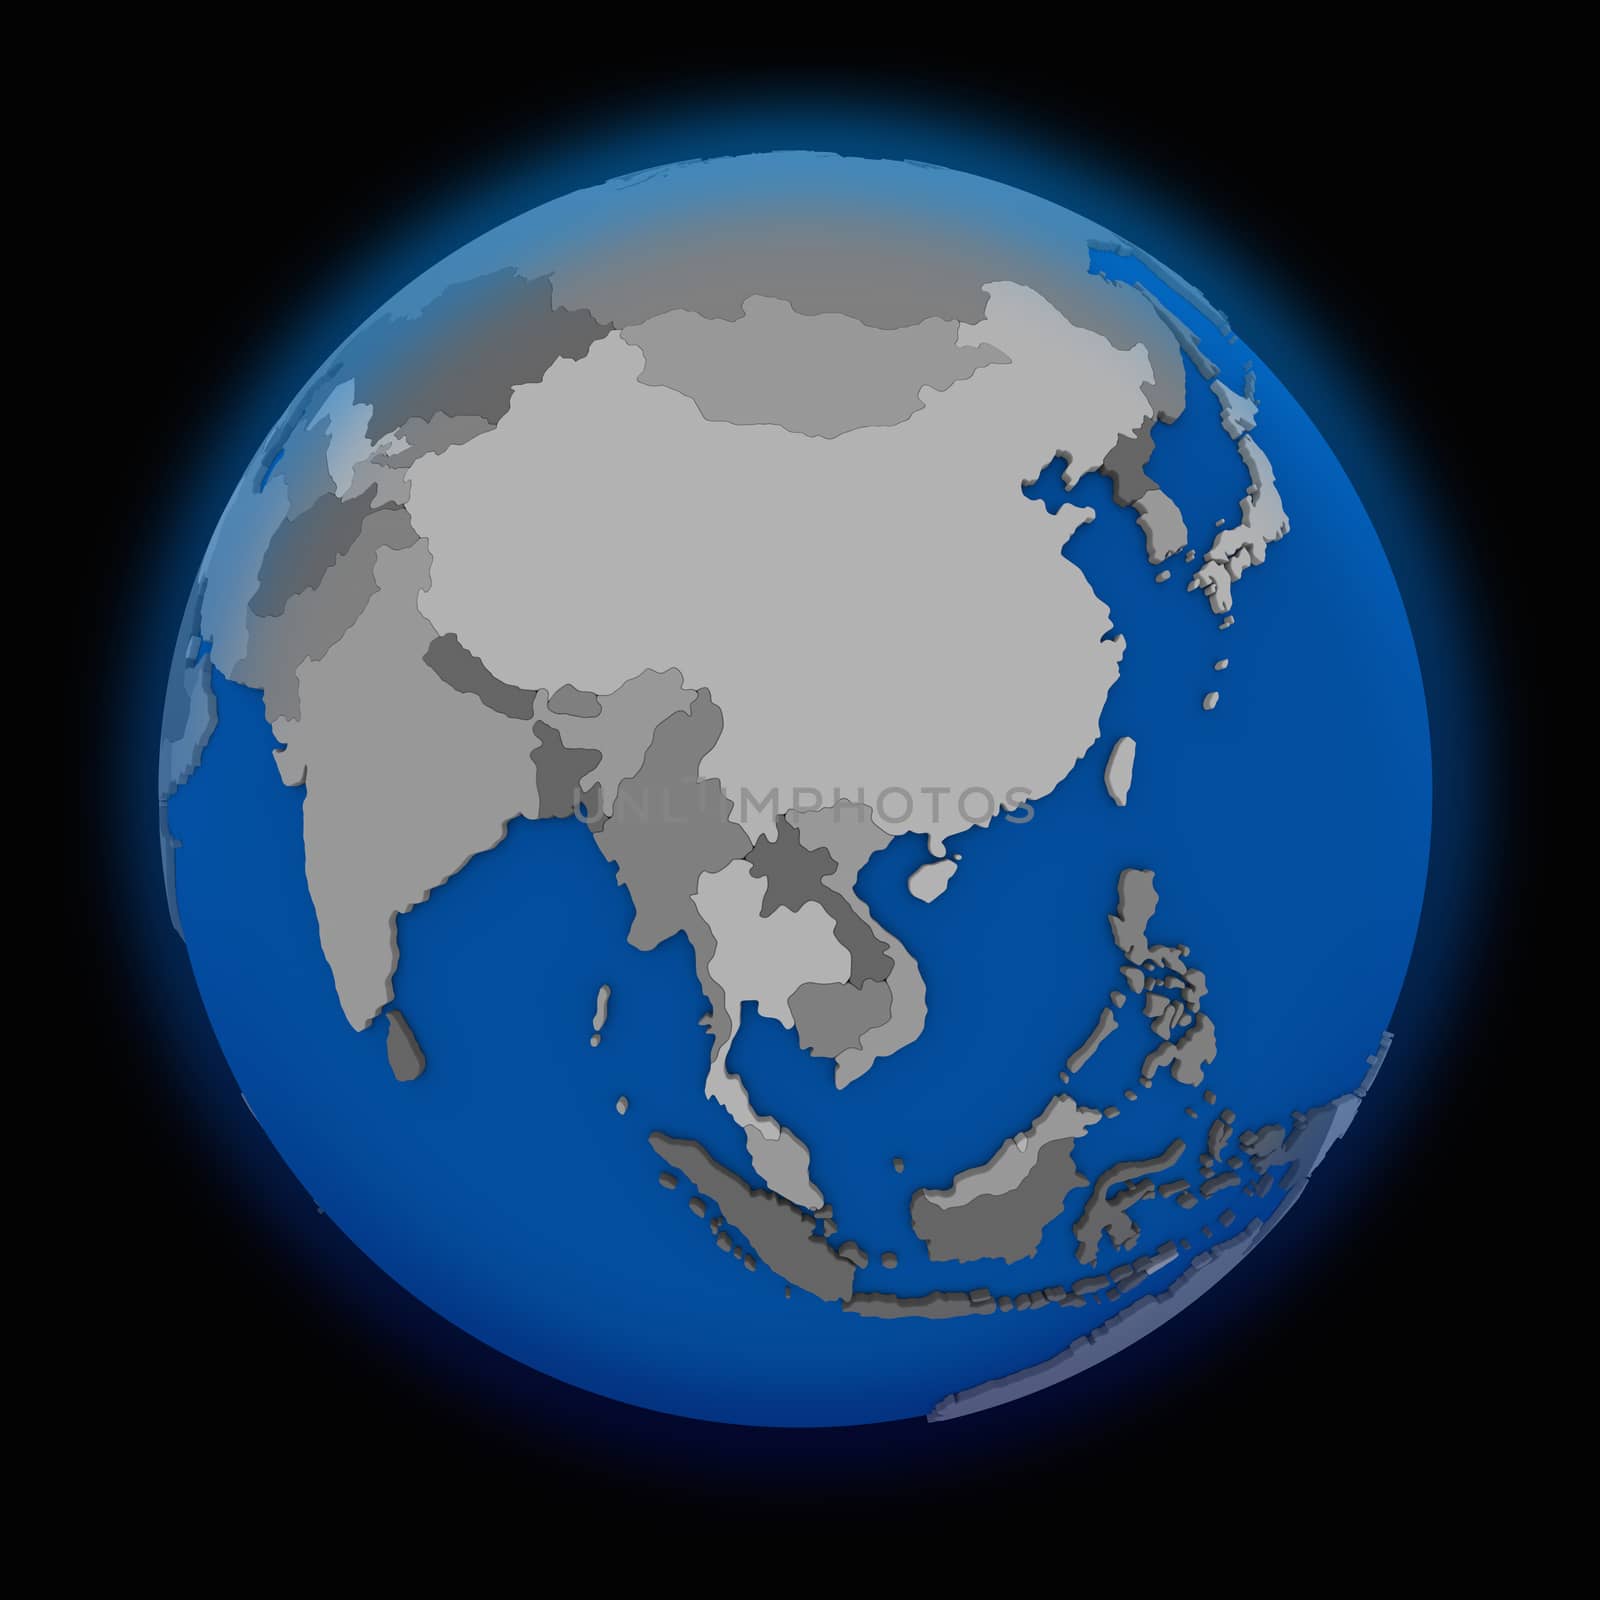 southeast Asia on political globe on black background